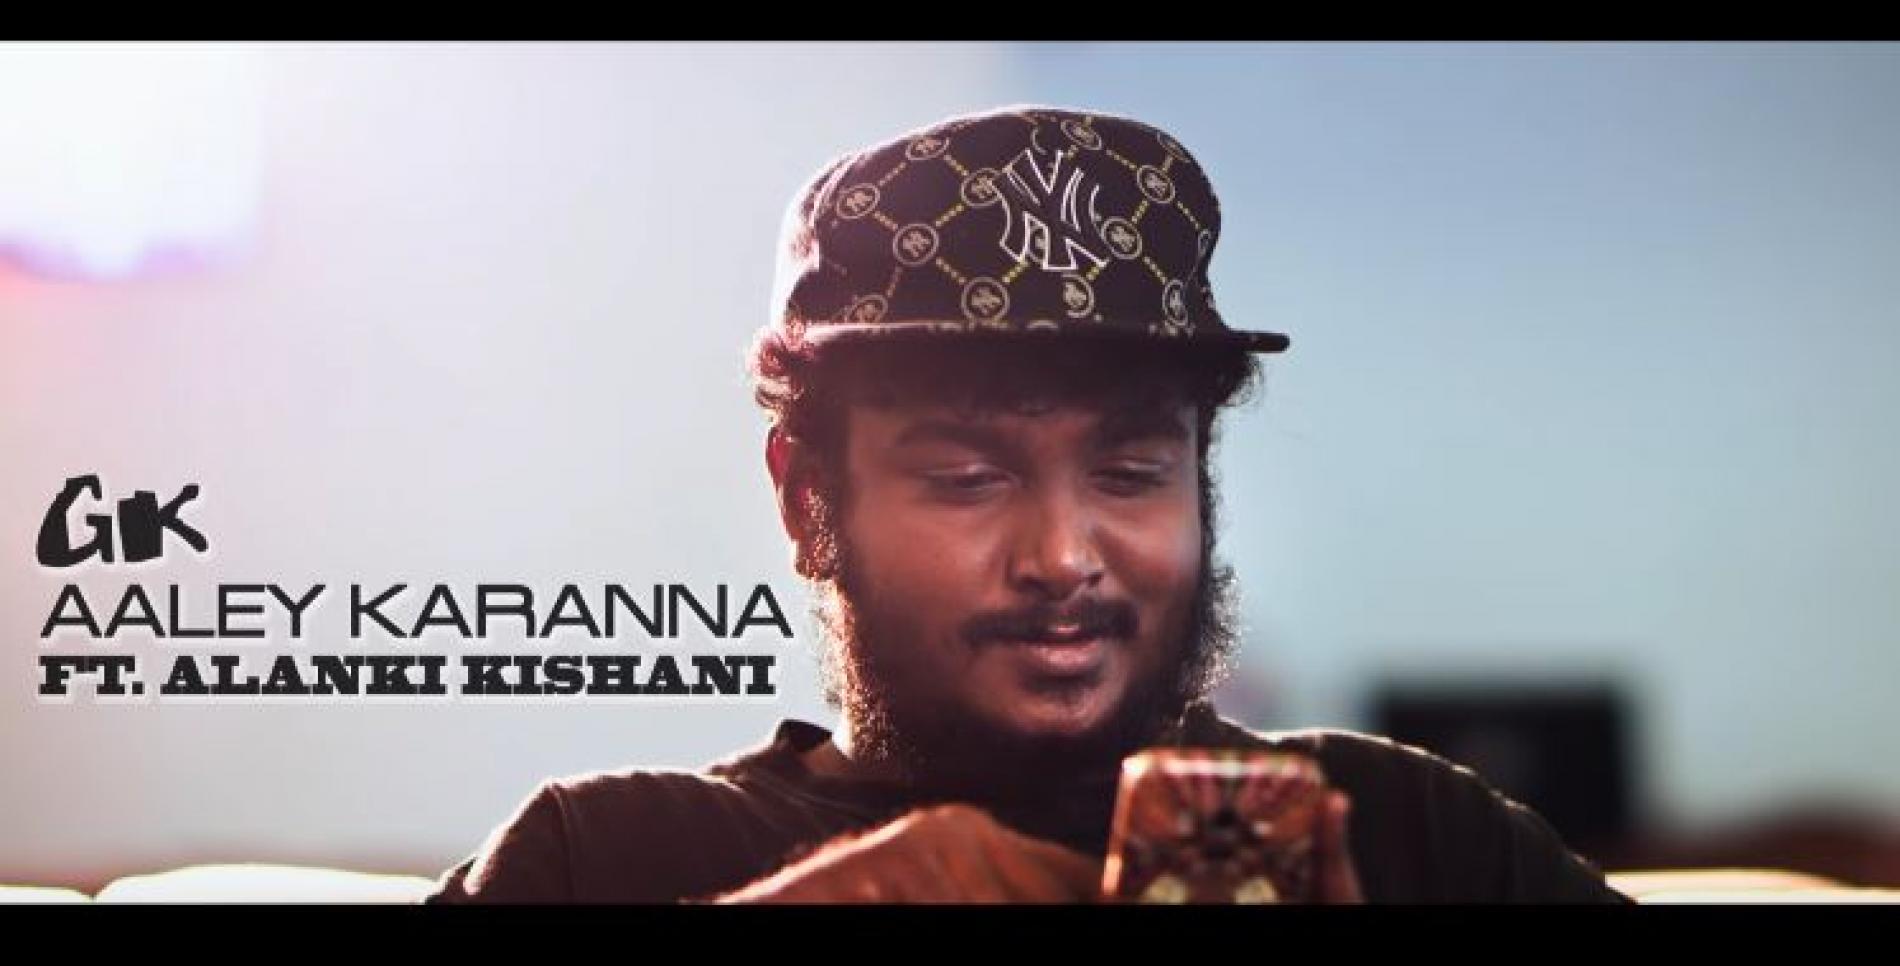 GK Ft. Alanki Kishani Perera – Aaley Karanna (Official Music Video)